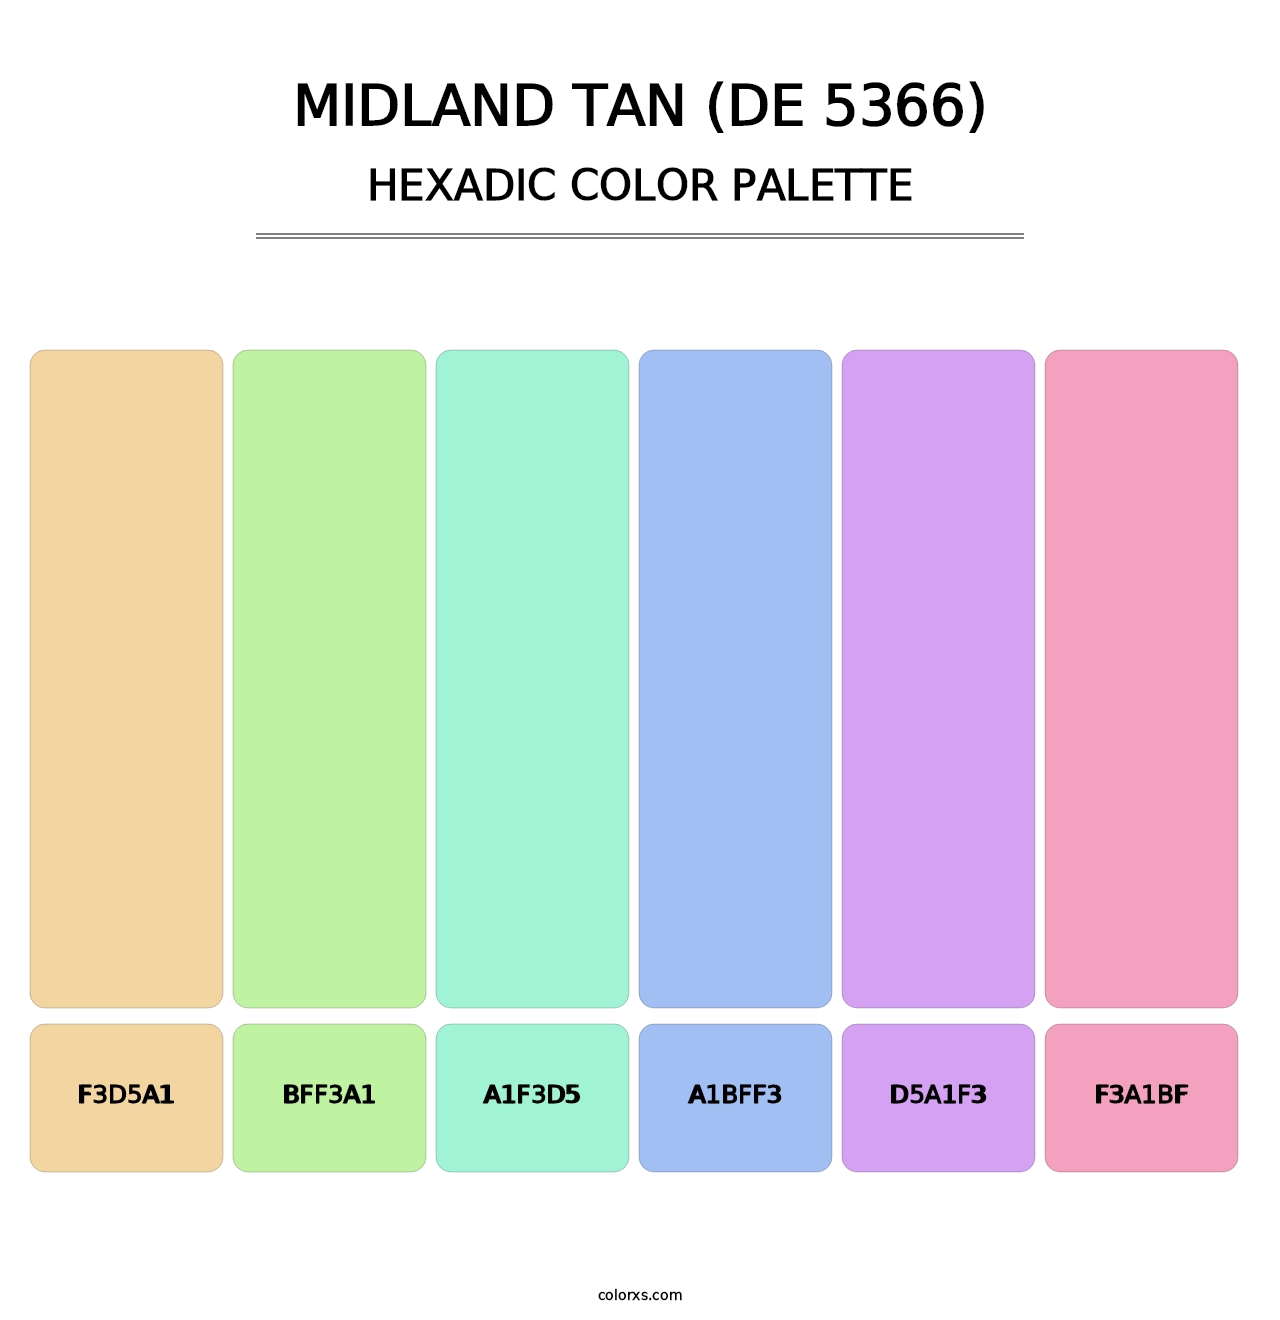 Midland Tan (DE 5366) - Hexadic Color Palette